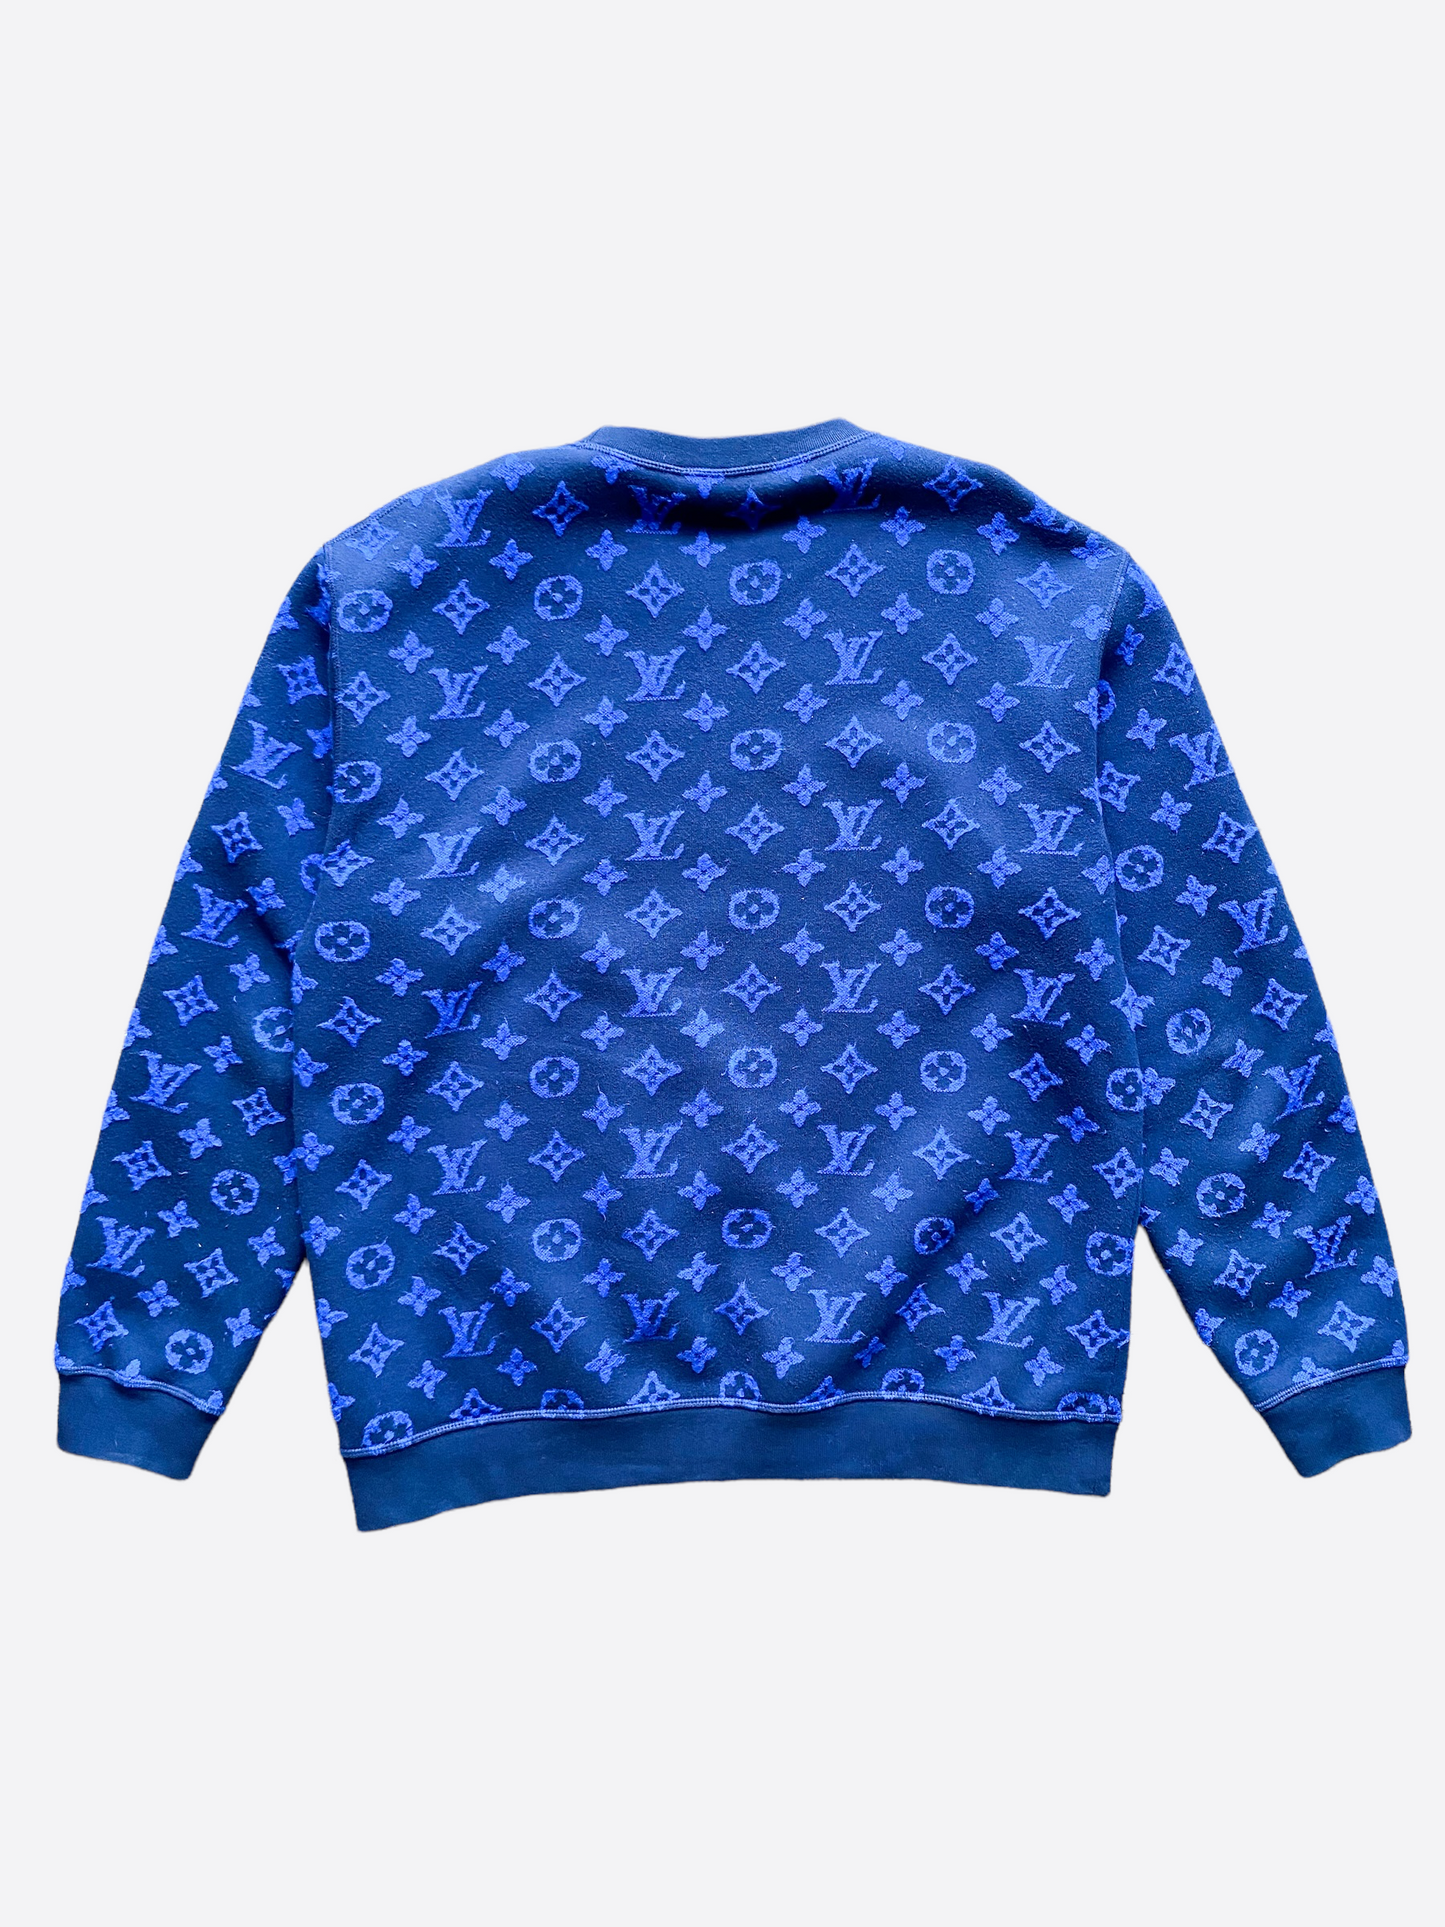 Blue cotton knitwear & sweatshirt Louis Vuitton Blue size XXL